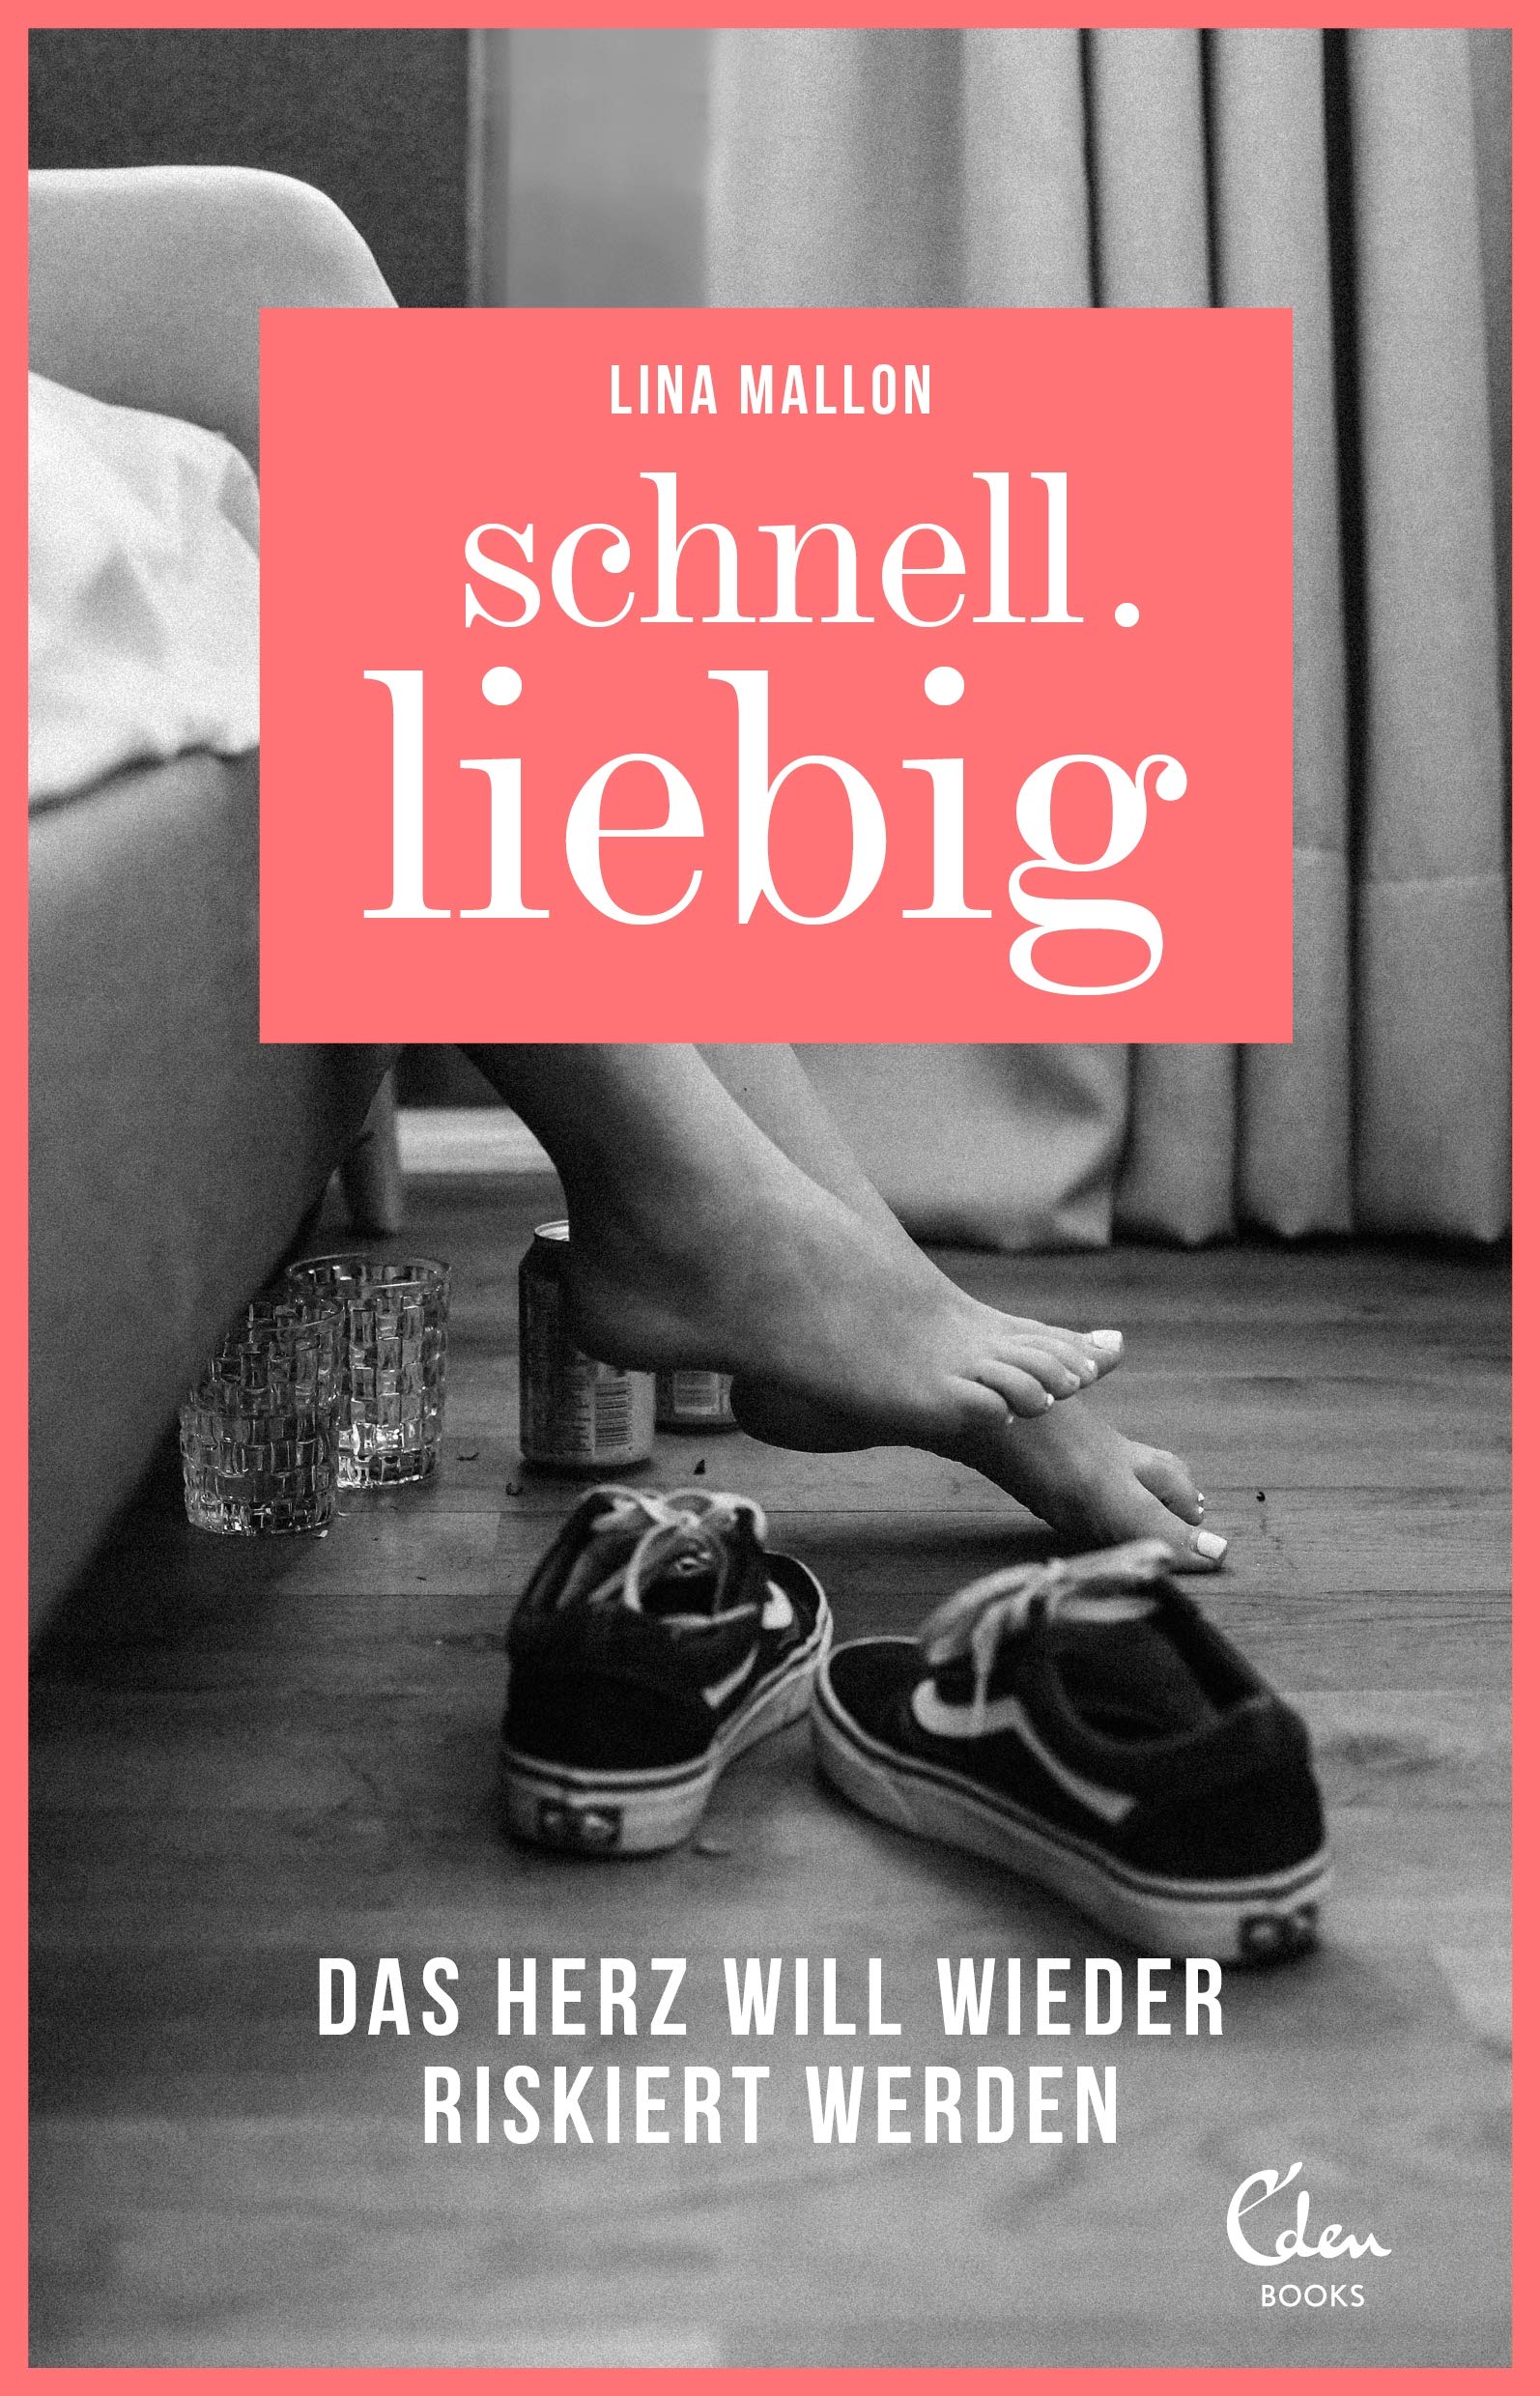 Buchcover: Lina Mallon: Schnell.liebig